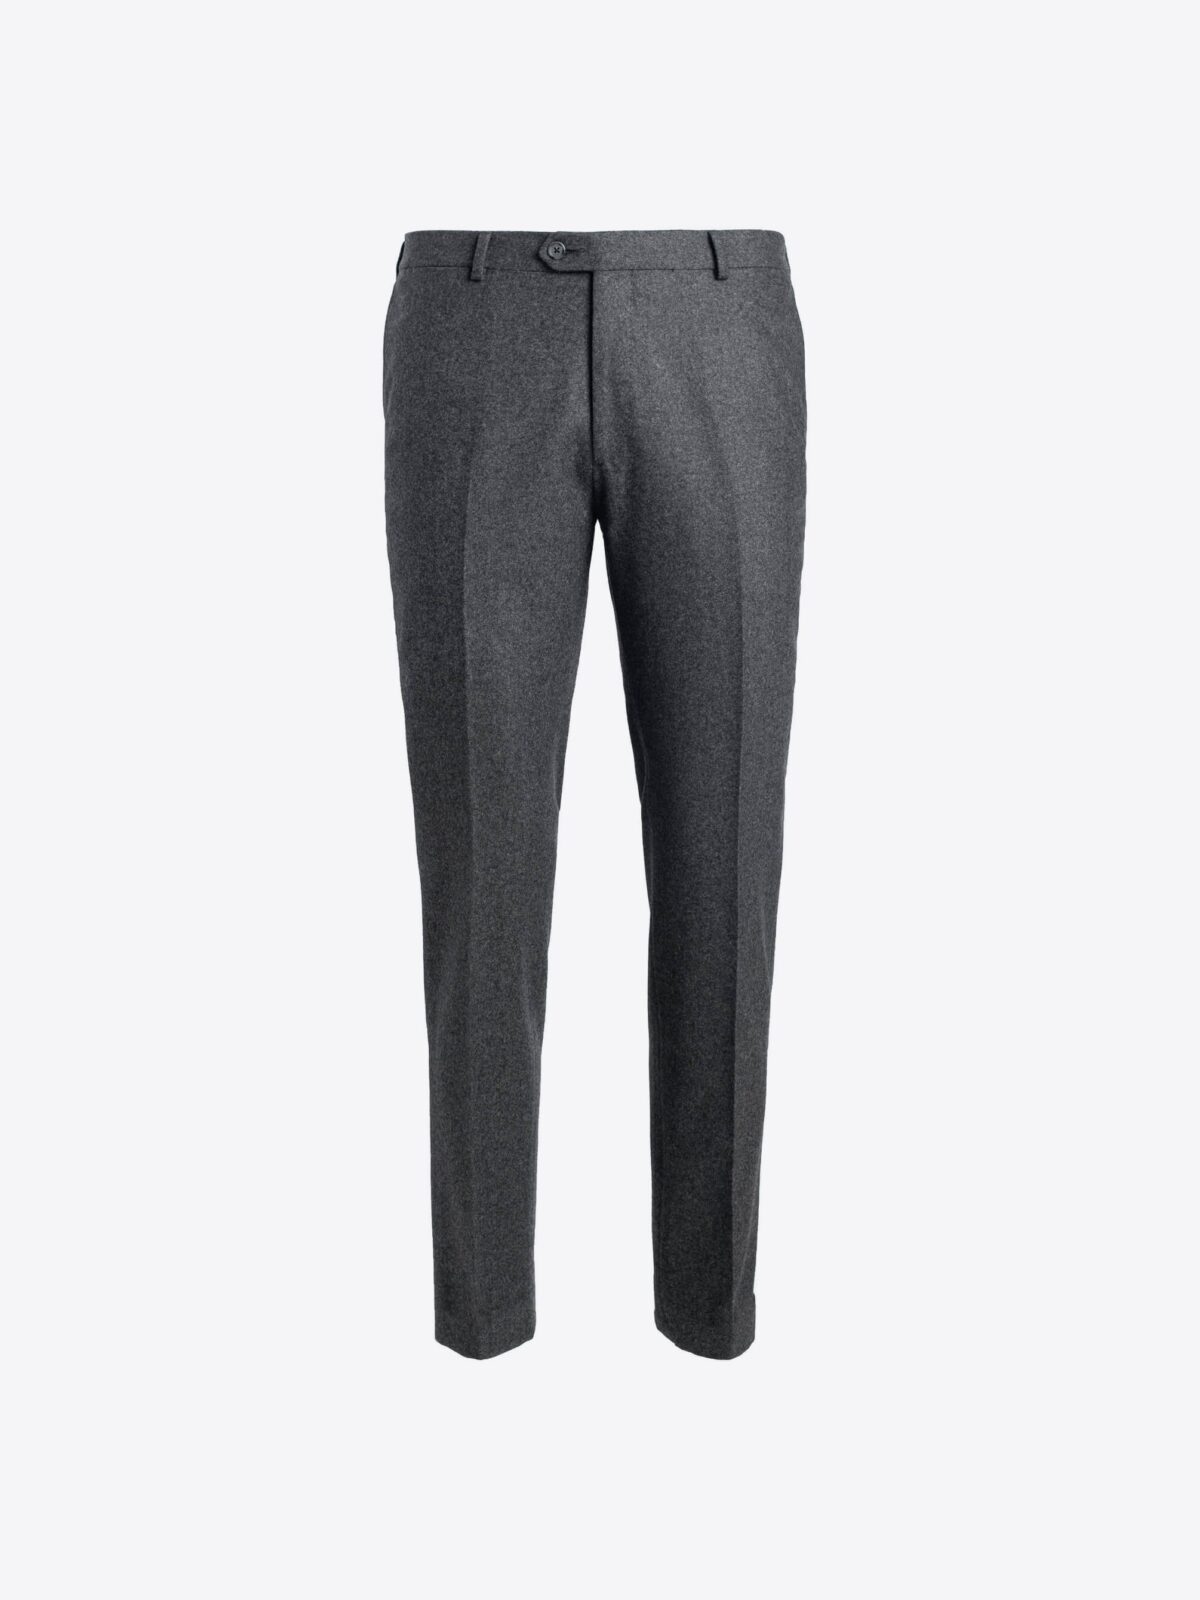 MANCREW Formal Trousers for men | Formal pants for men | Black trousers man  | formal